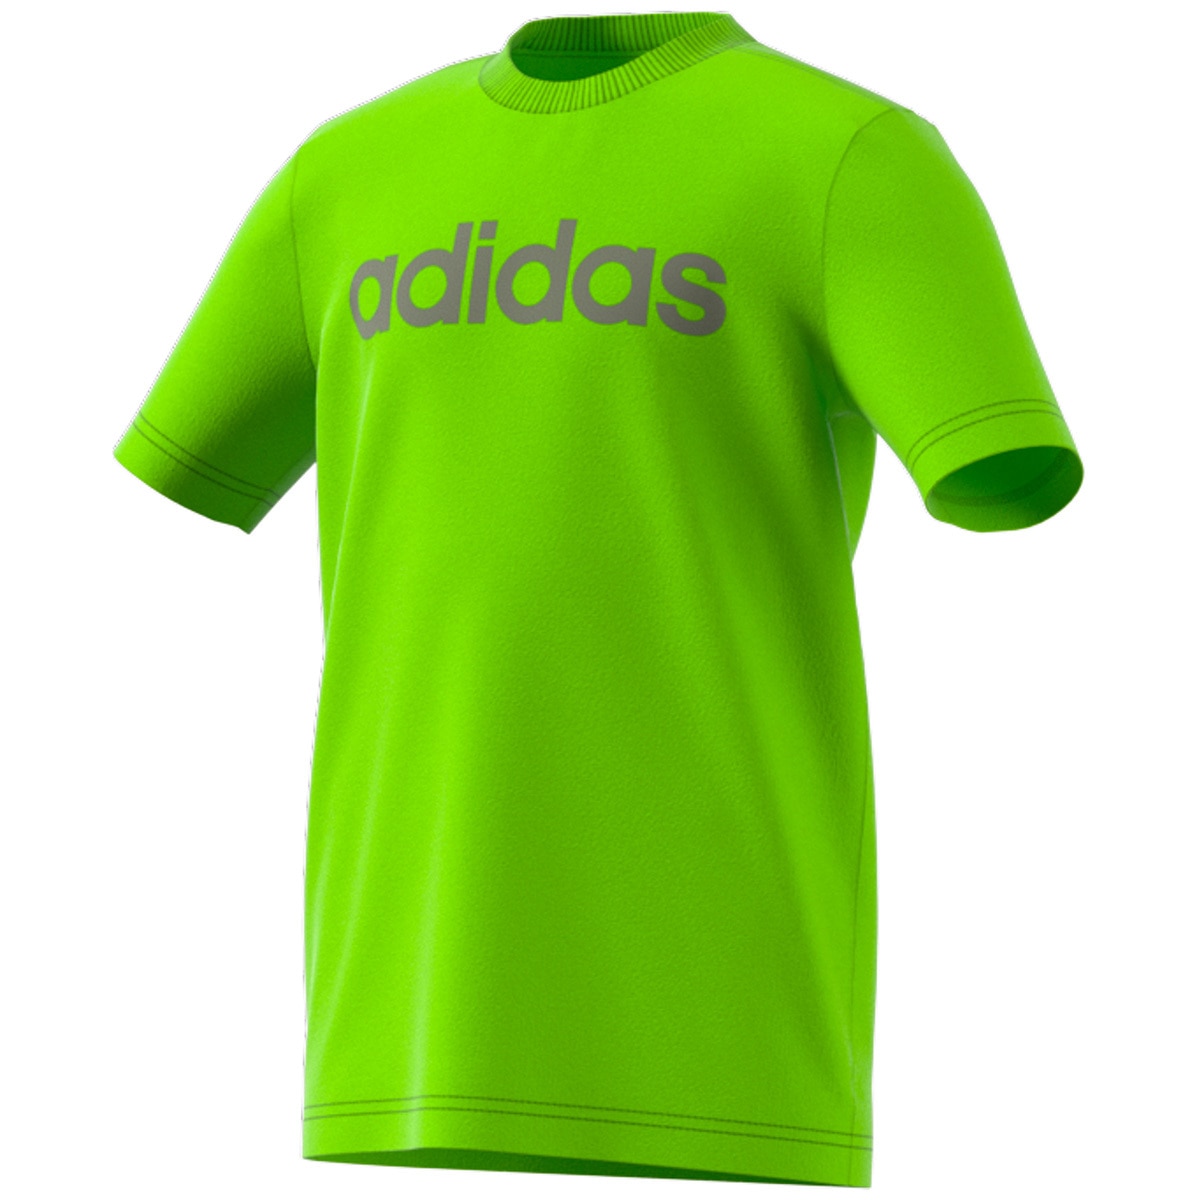 Adidas youth Tee - Green